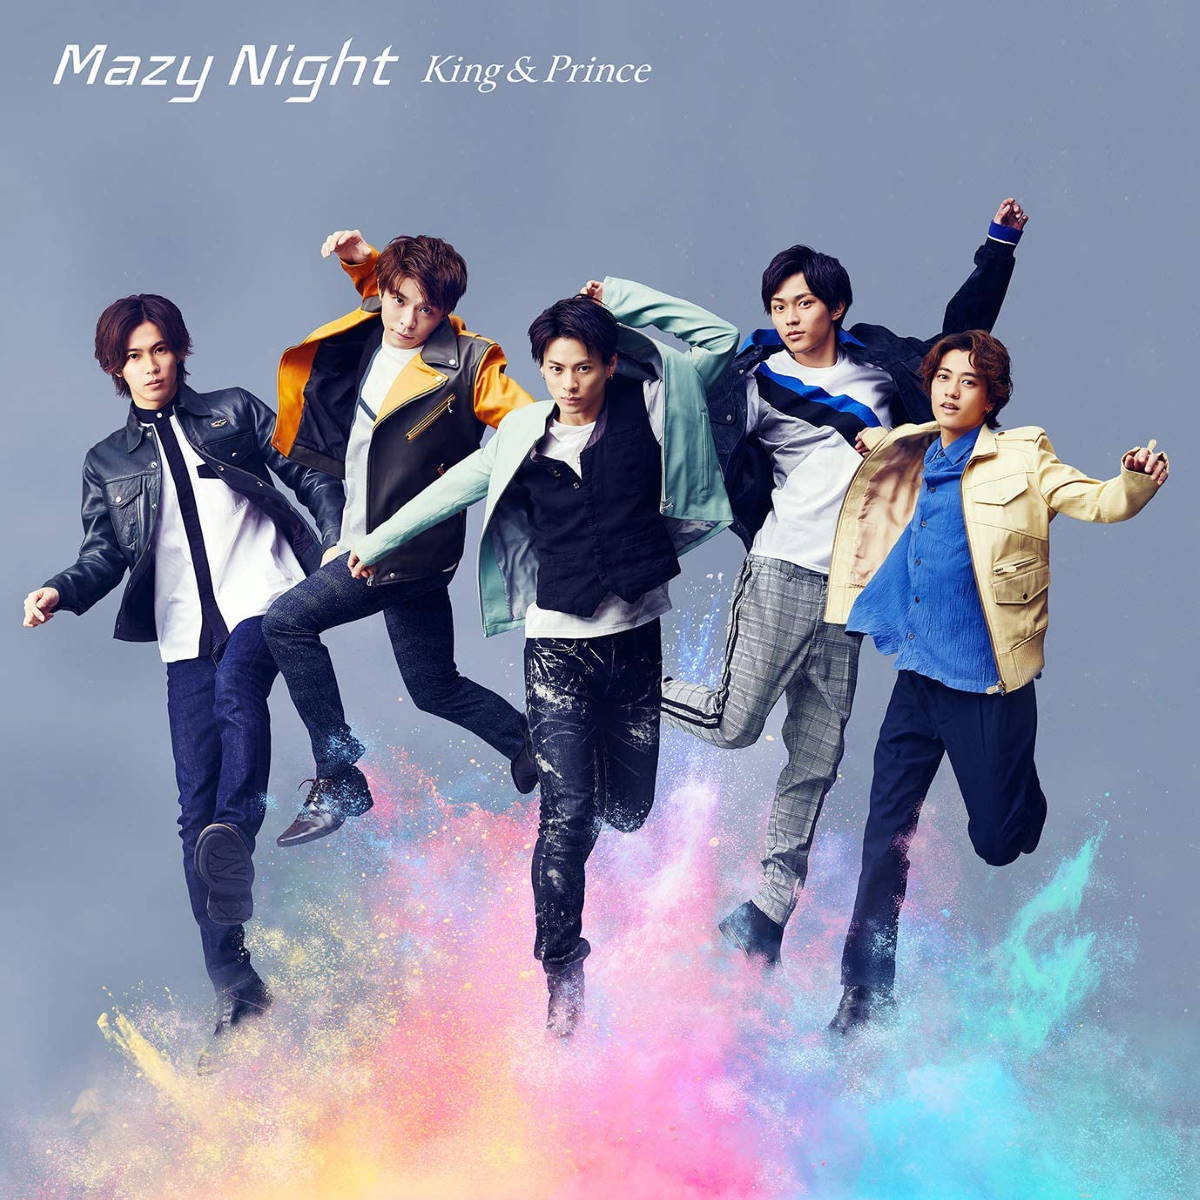 King & Prince Mazy Night 歌詞 - 歌詞探索【歌詞リリ】